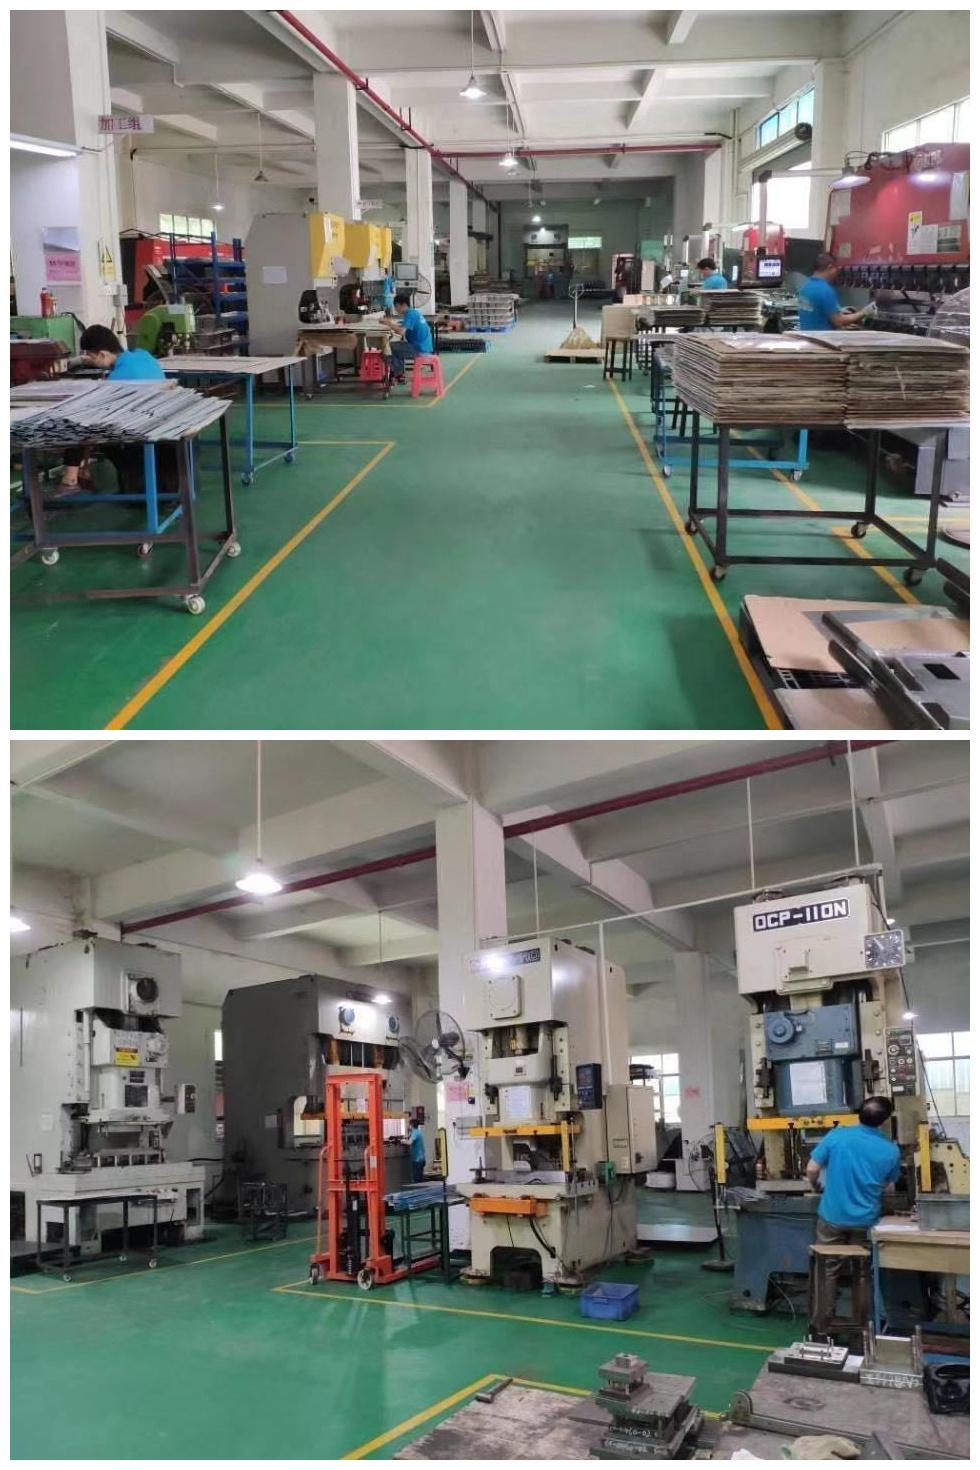 Customizied Manufacture Sheet Parts Aluminum Metal Stamping Parts